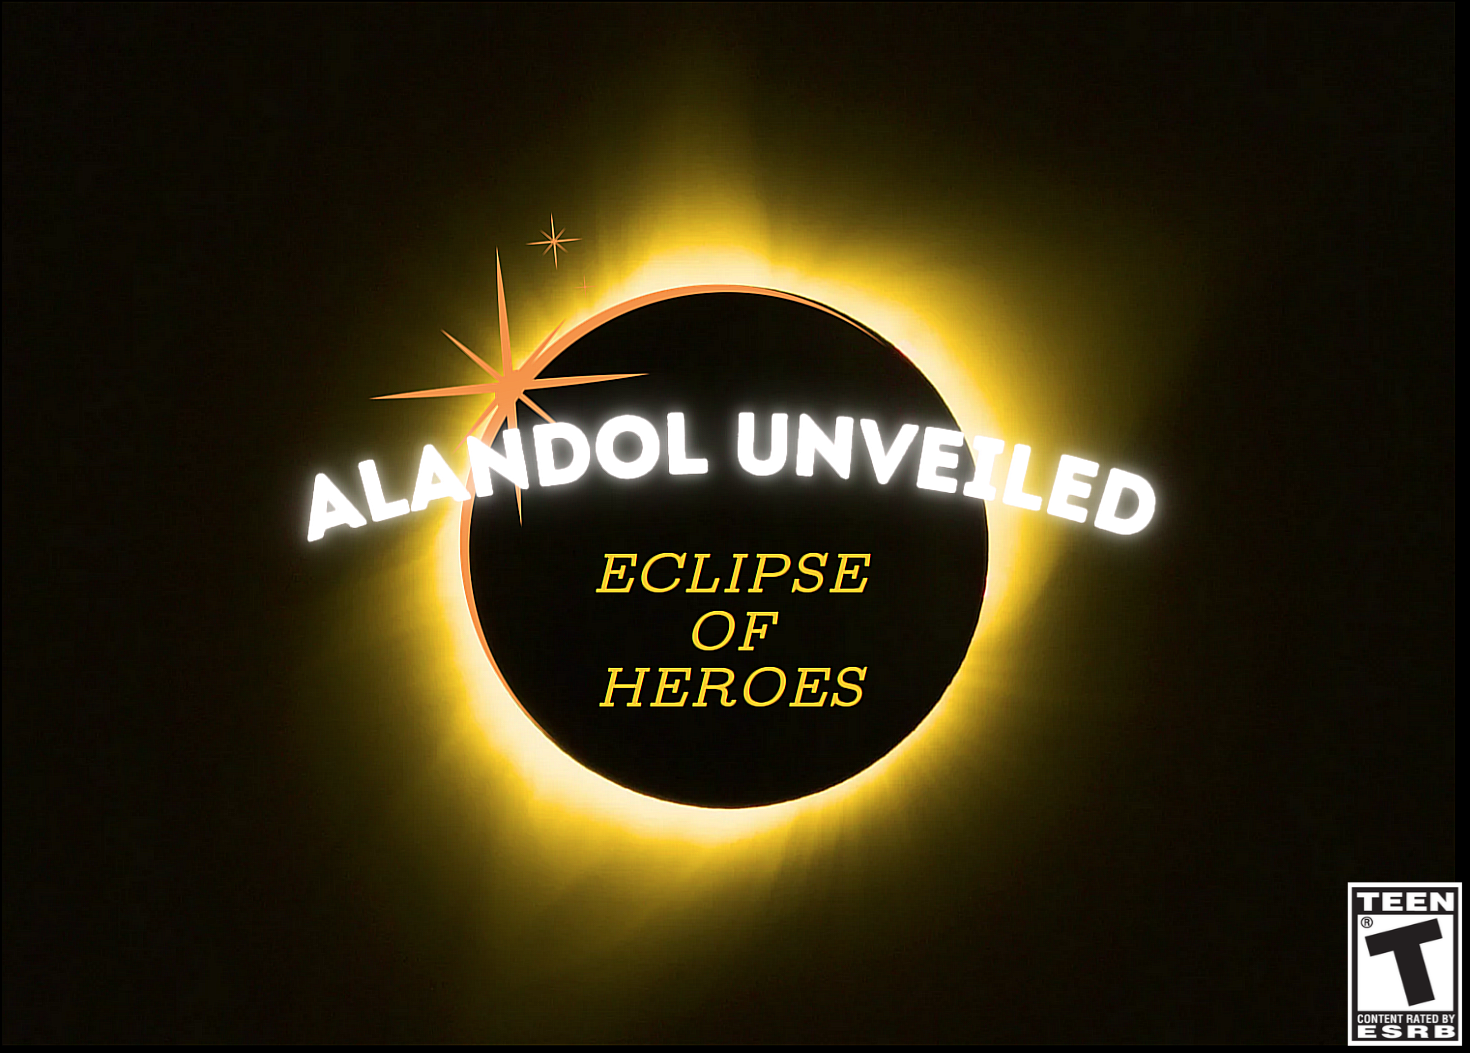 Alandol Unveiled: Eclipse of Heroes